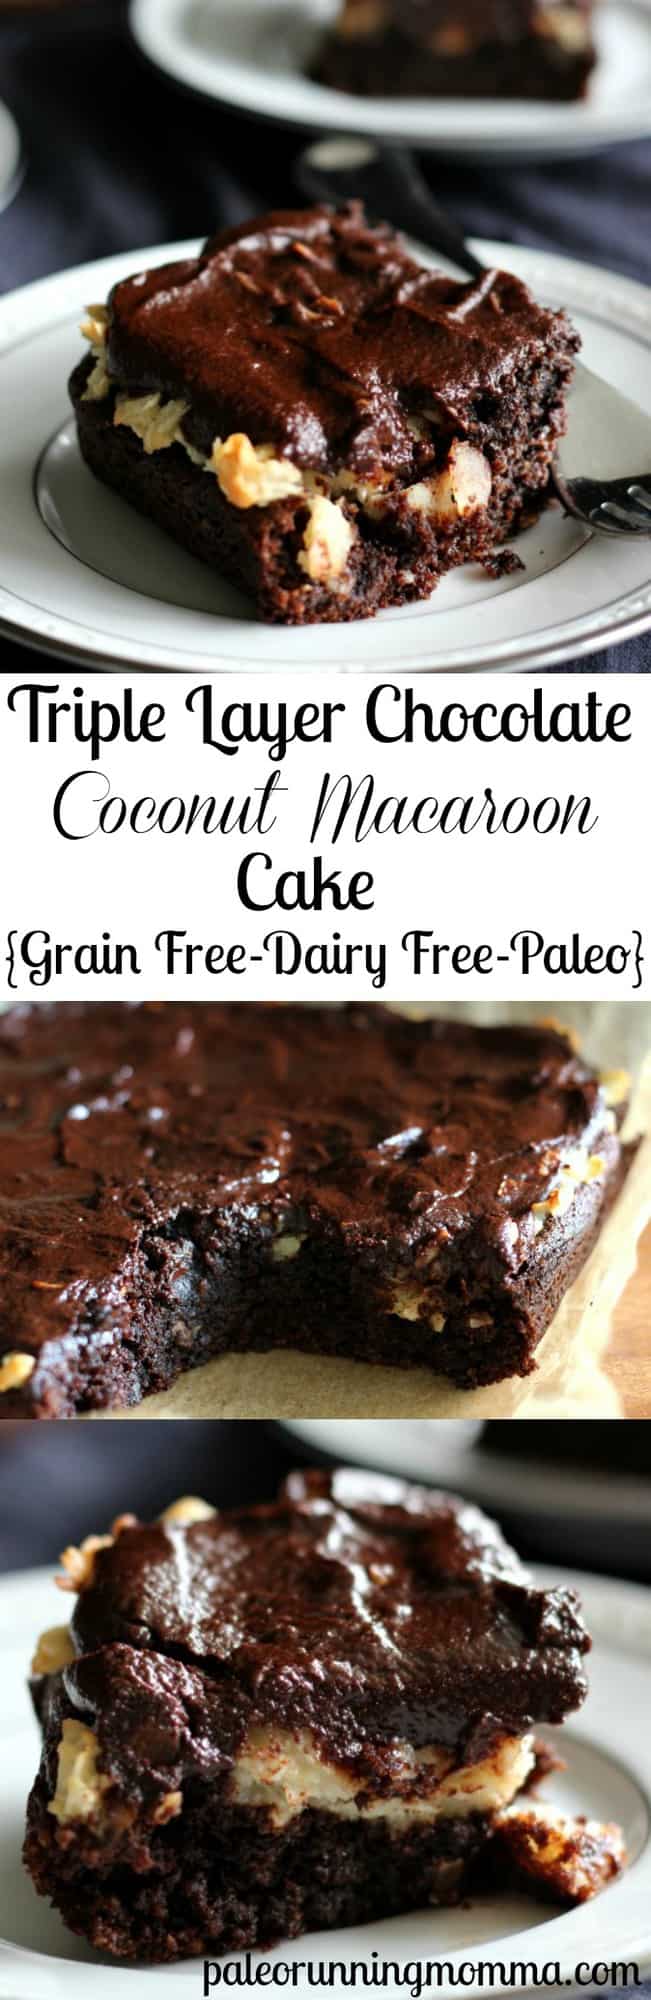  Triple Layer Chocolate Coconut Macaroon Cake - Gluten Free #grainfree #dairyfree #paleo